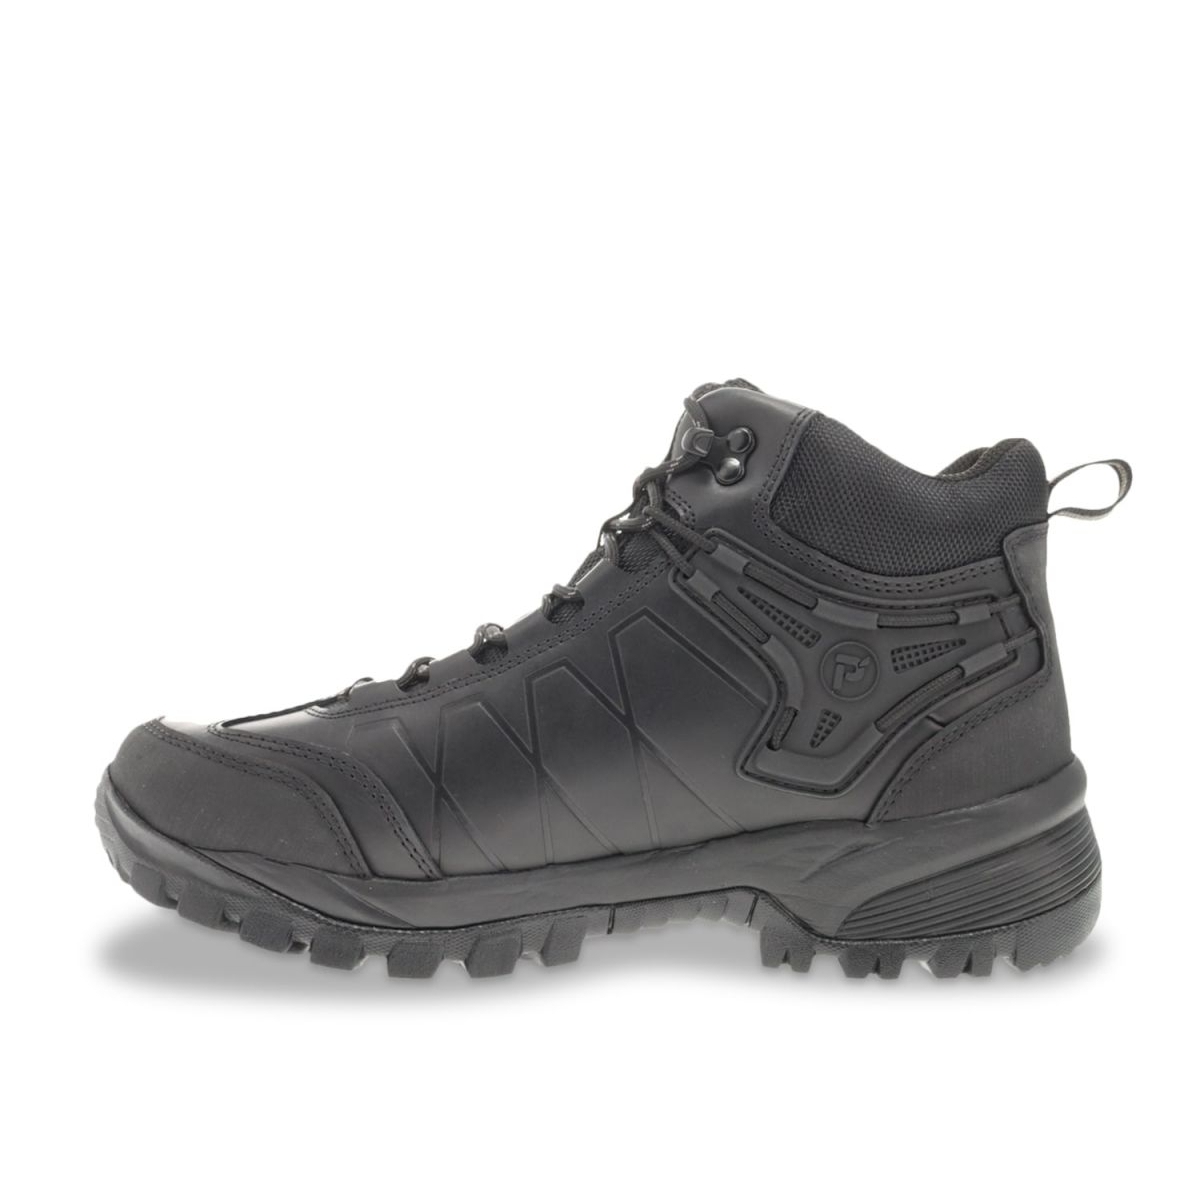 Propet Men's Ridge Walker Force Hiking Boots Black - MBA052LBLK BLACK - BLACK, 11